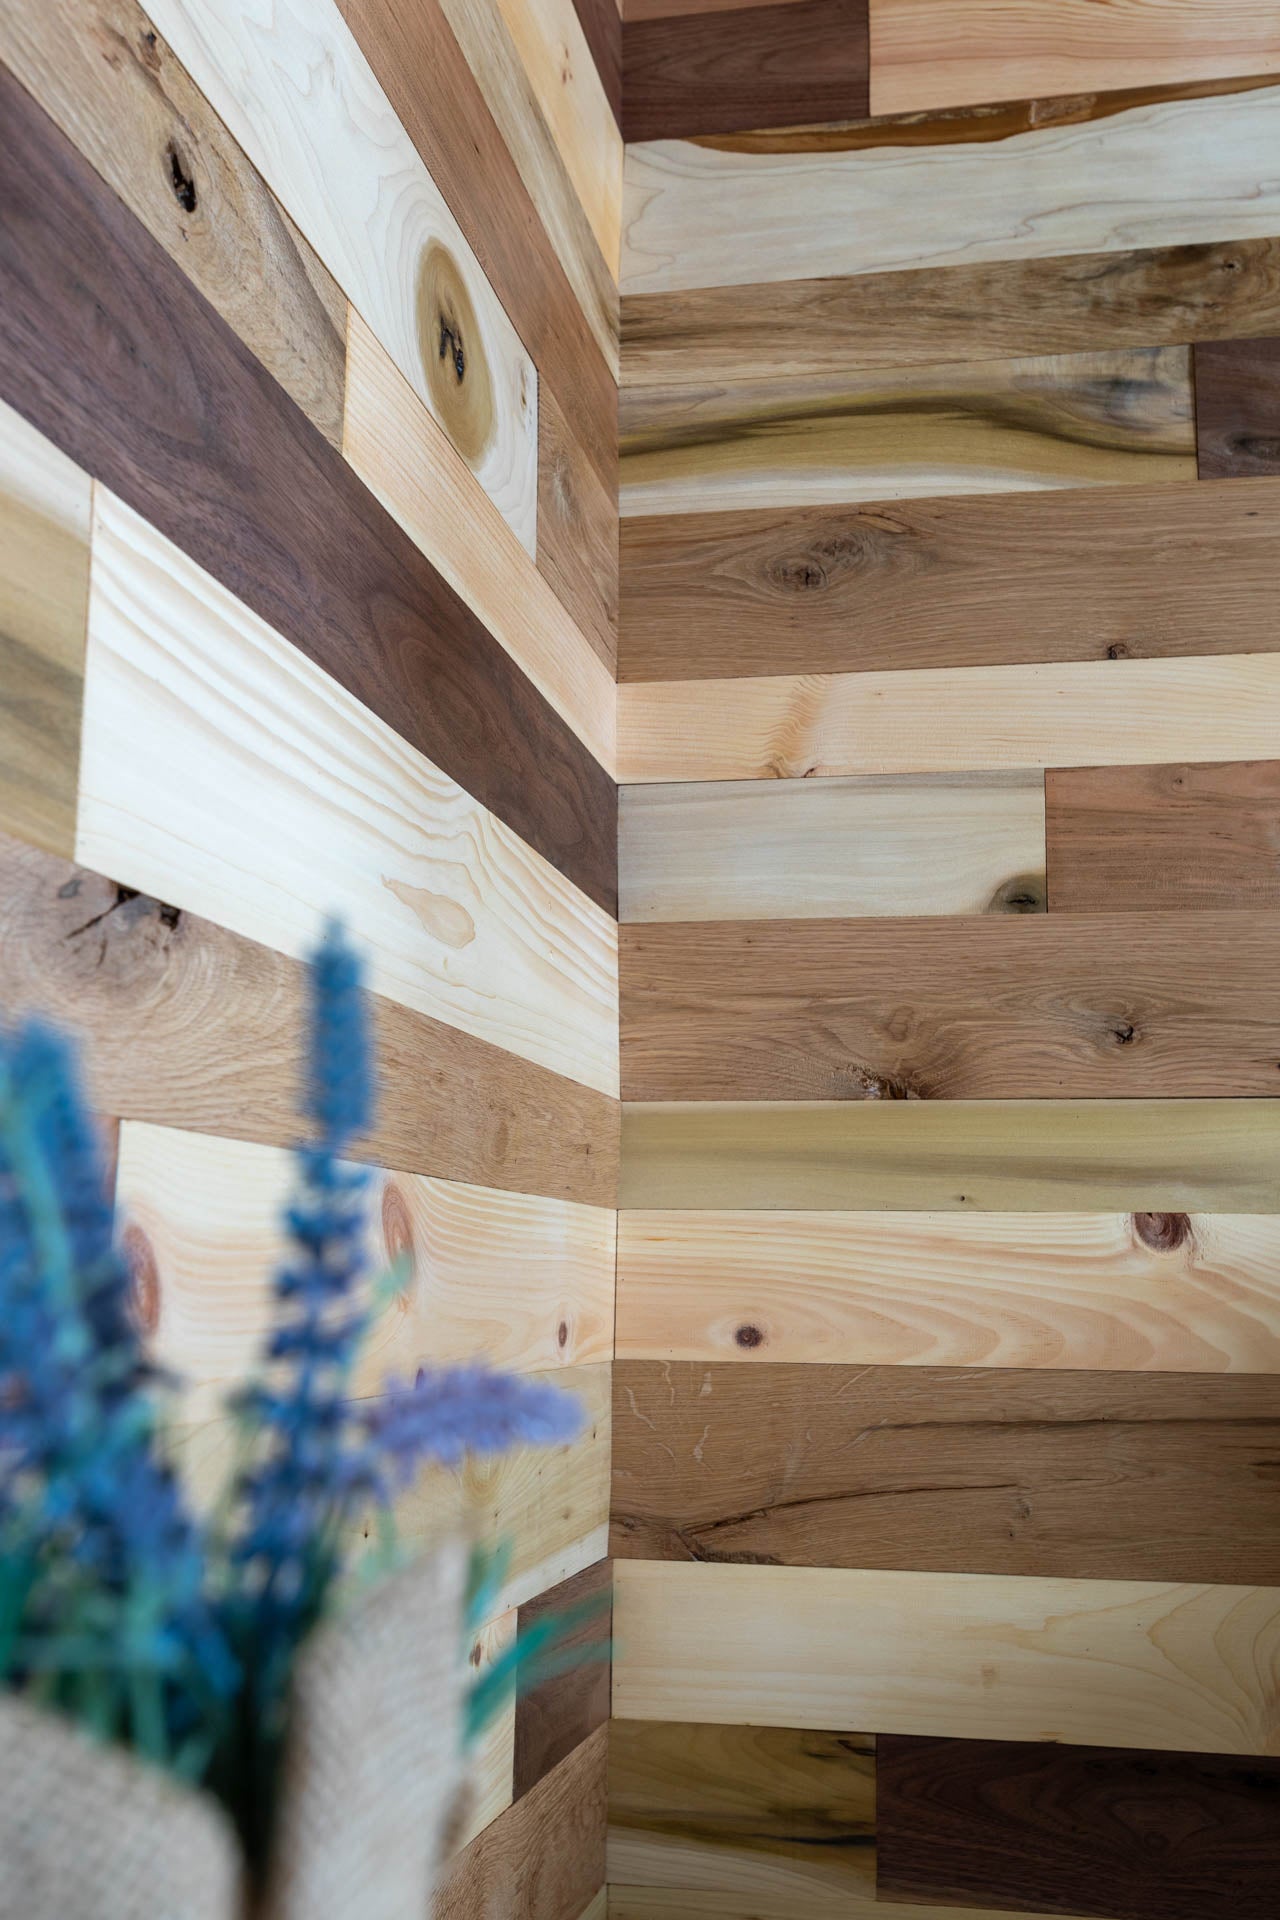 Premium Artisan Planks Wood Bundle (10.2 sq. ft.)